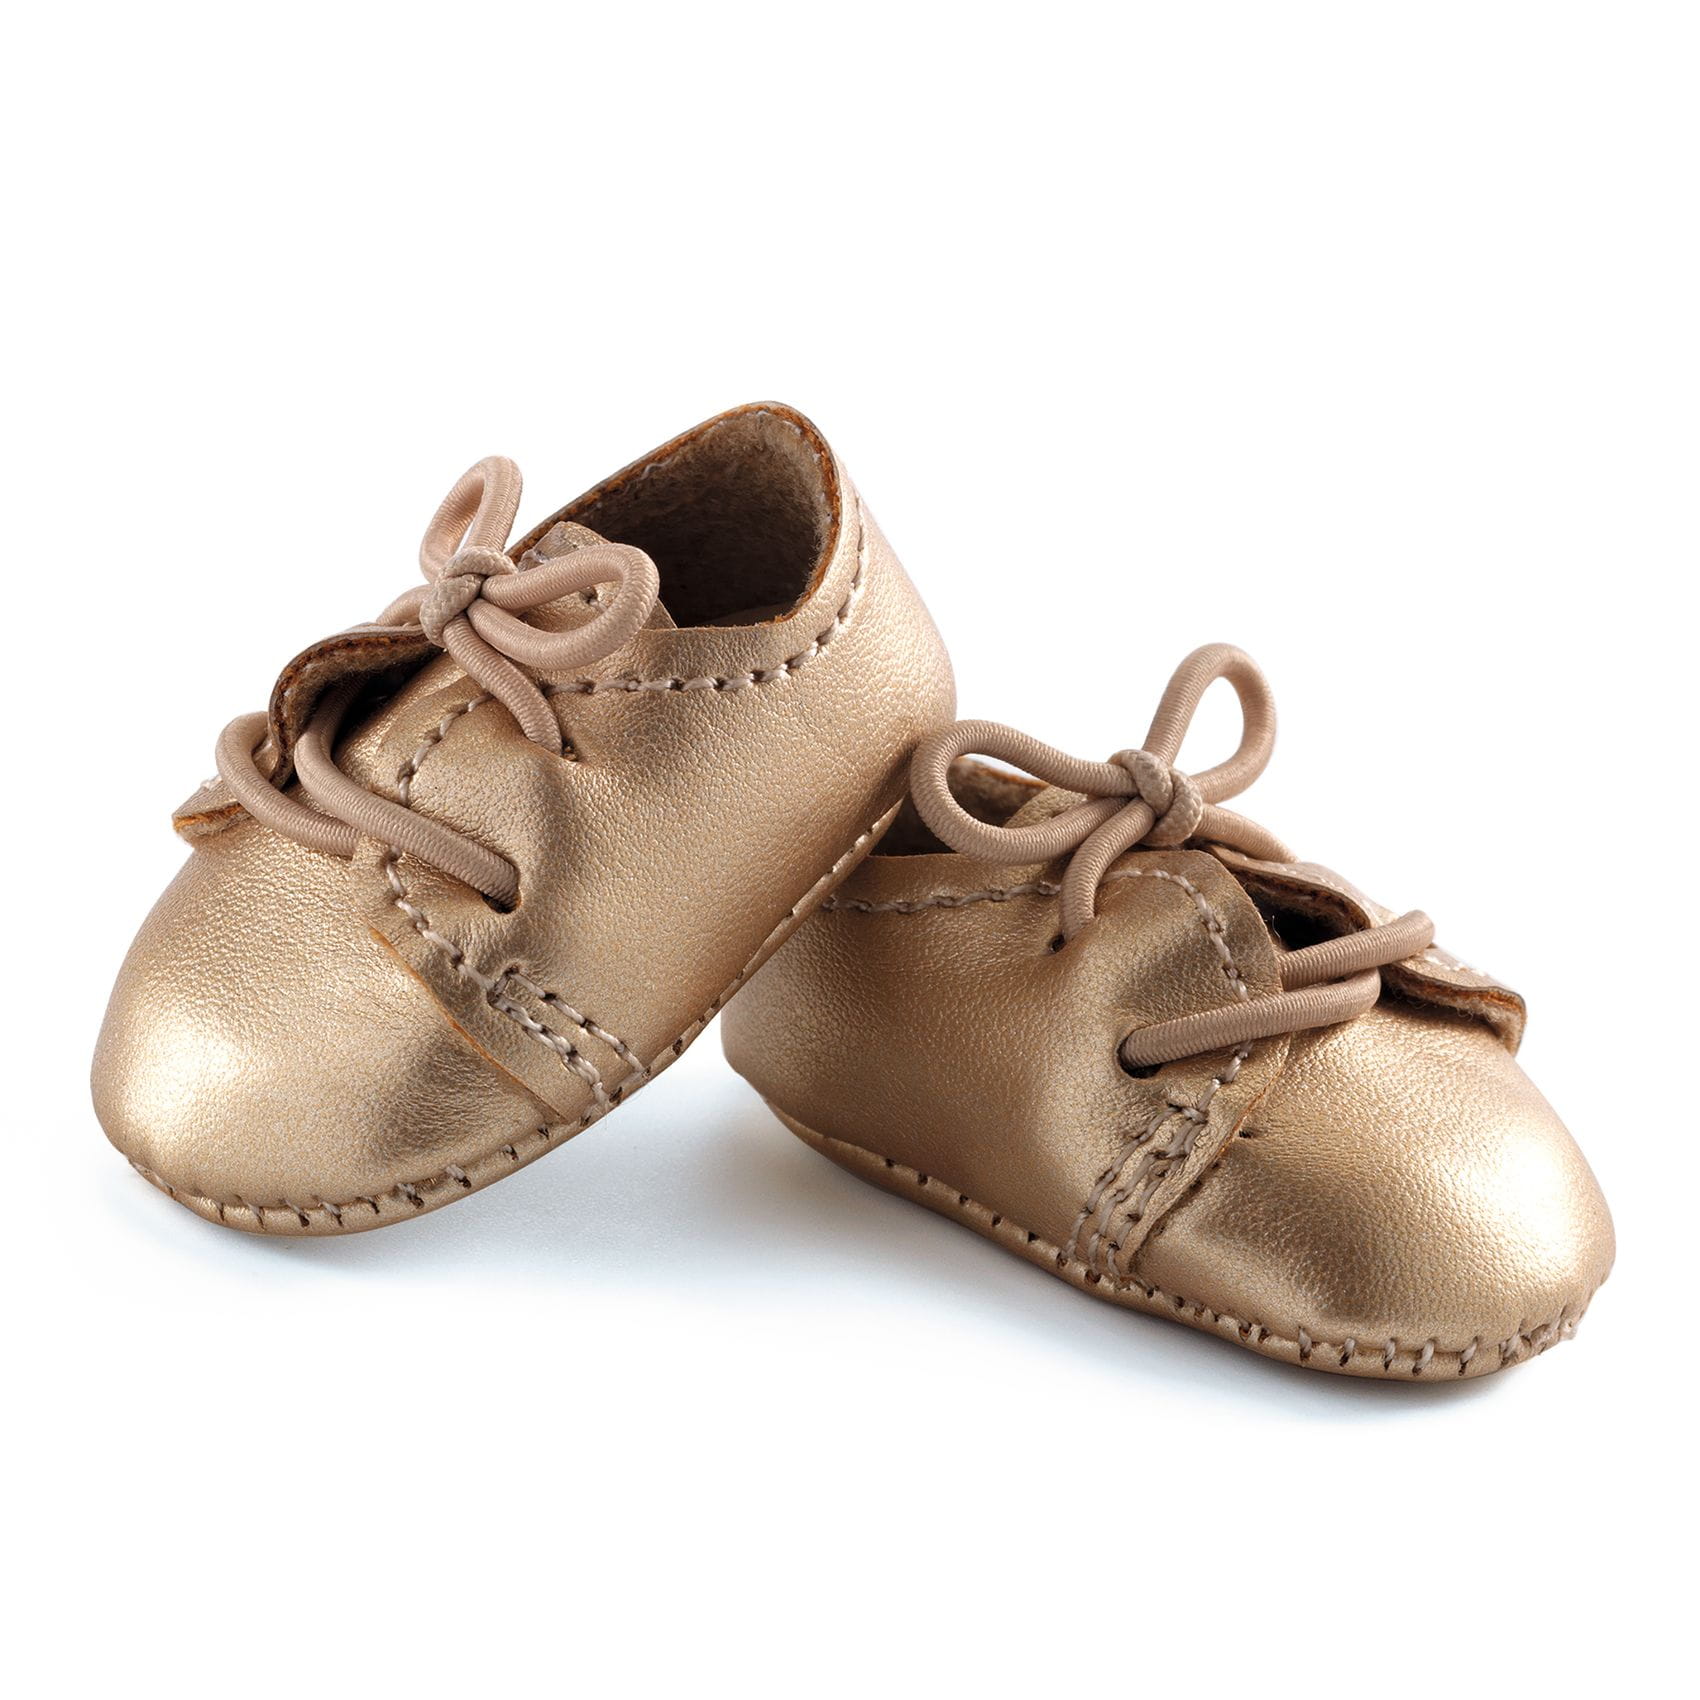 Poma: golden shoes for dolls